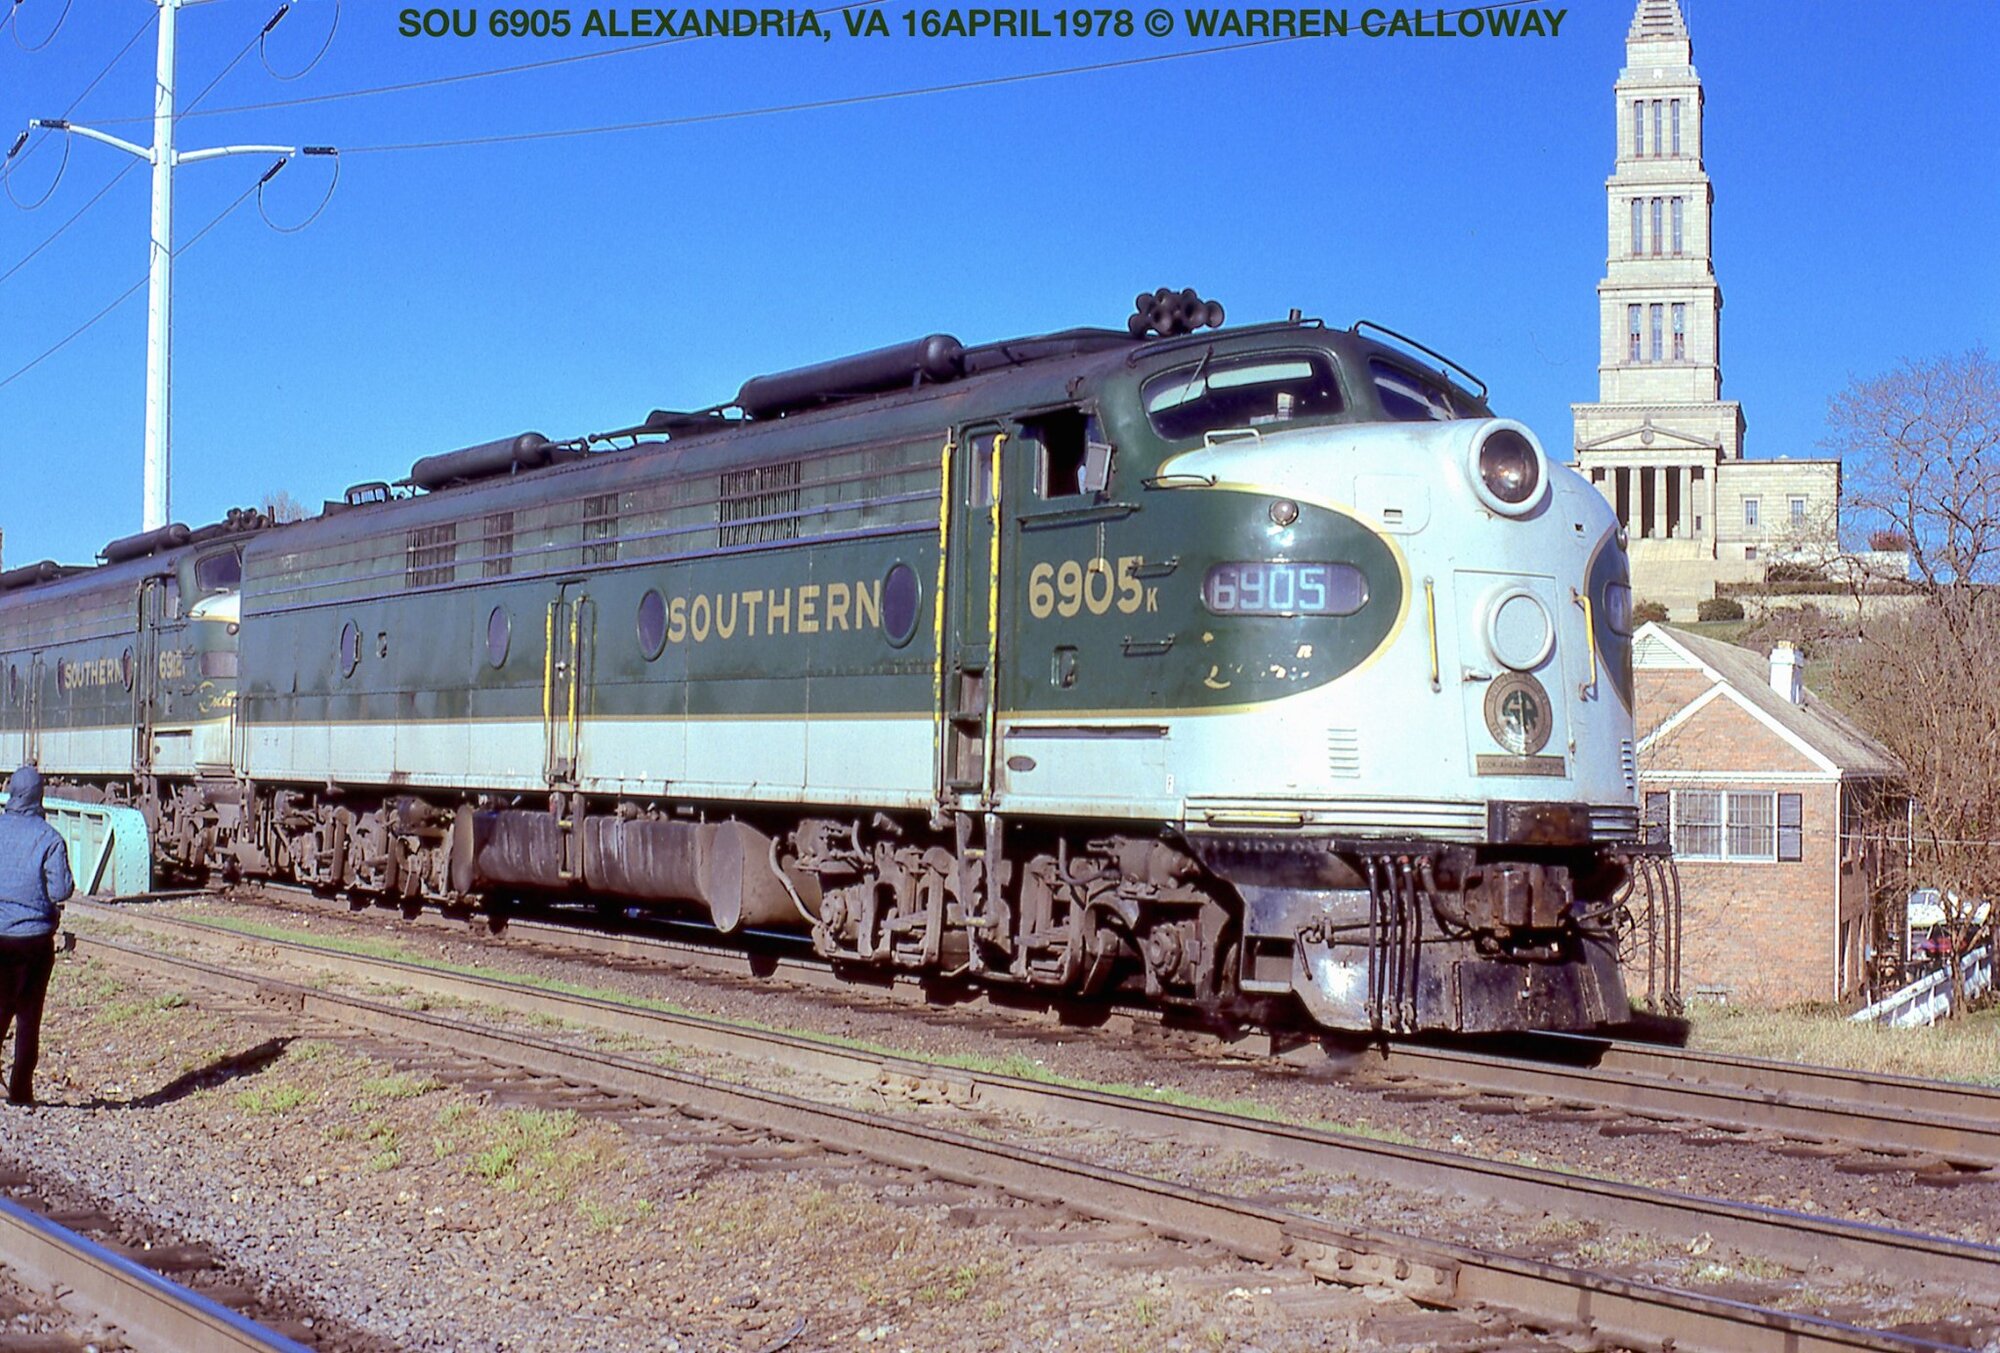 Southern Crescent - Alexandria - 16 April 1978 - WC.jpg